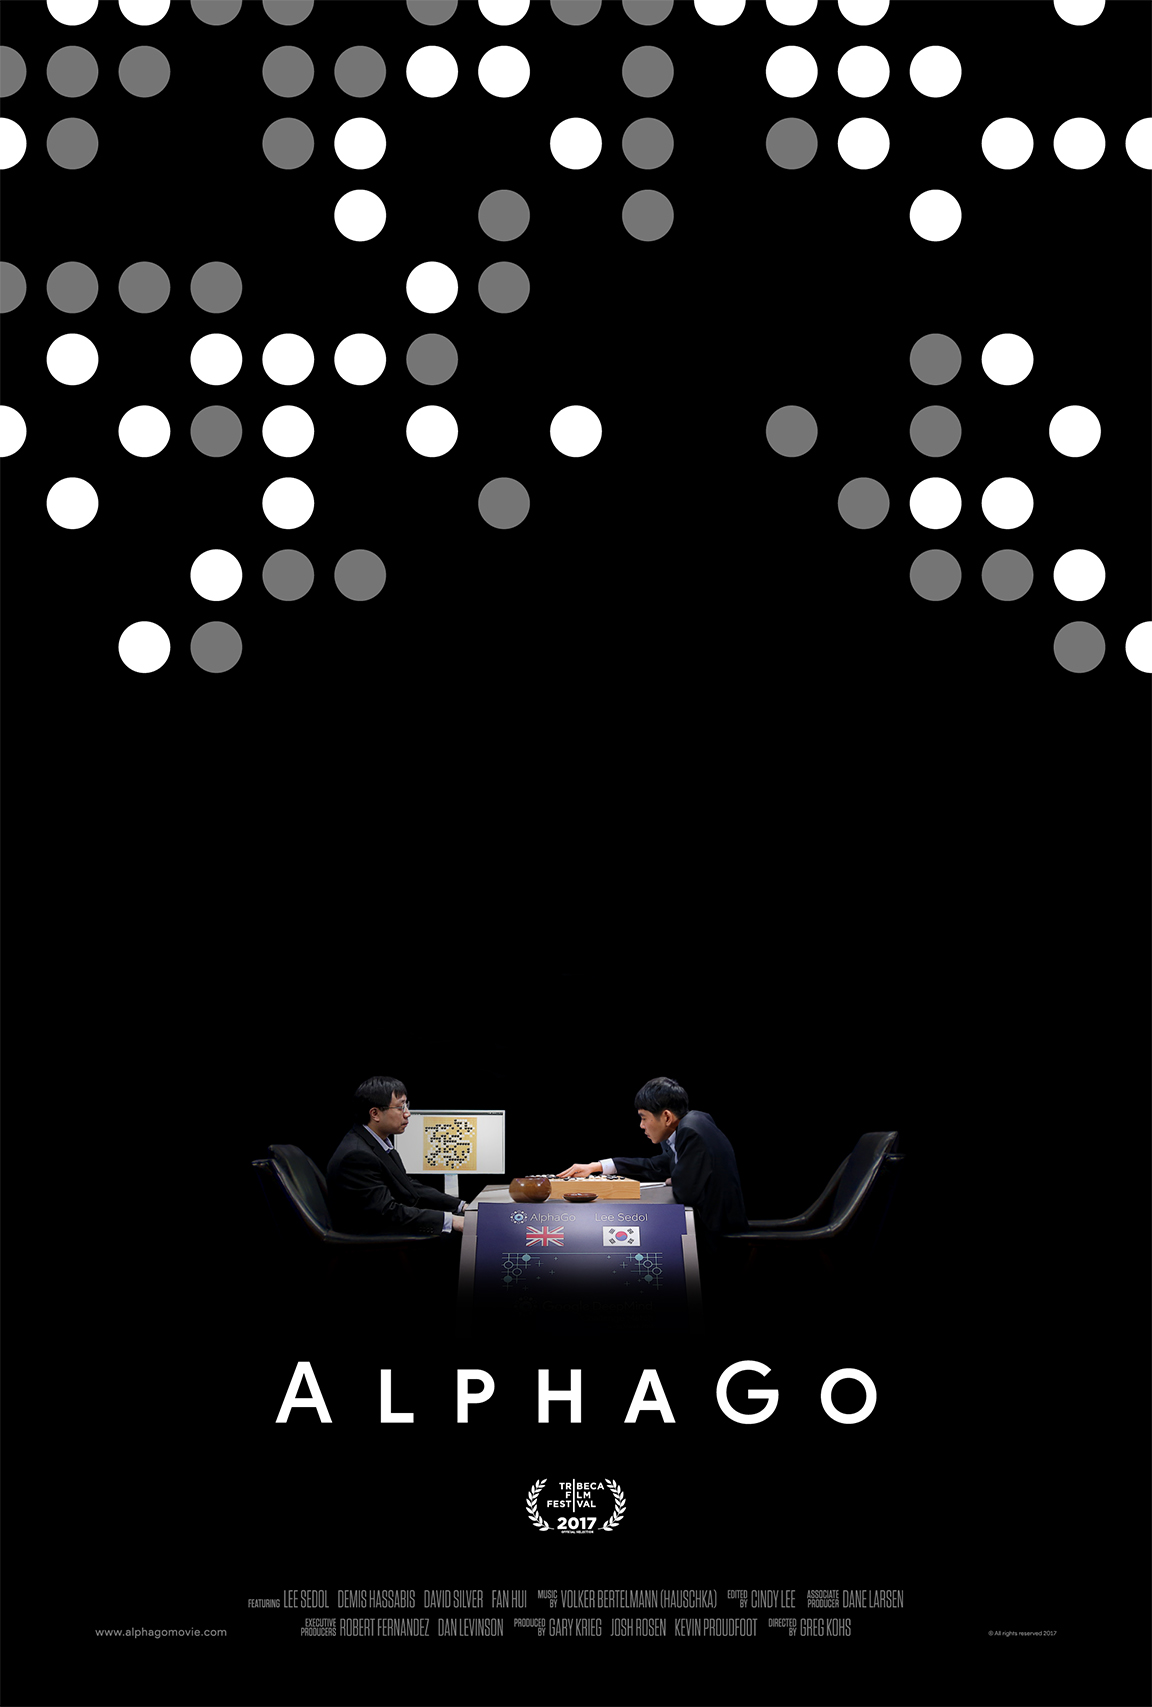 Nonton film AlphaGo layarkaca21 indoxx1 ganool online streaming terbaru